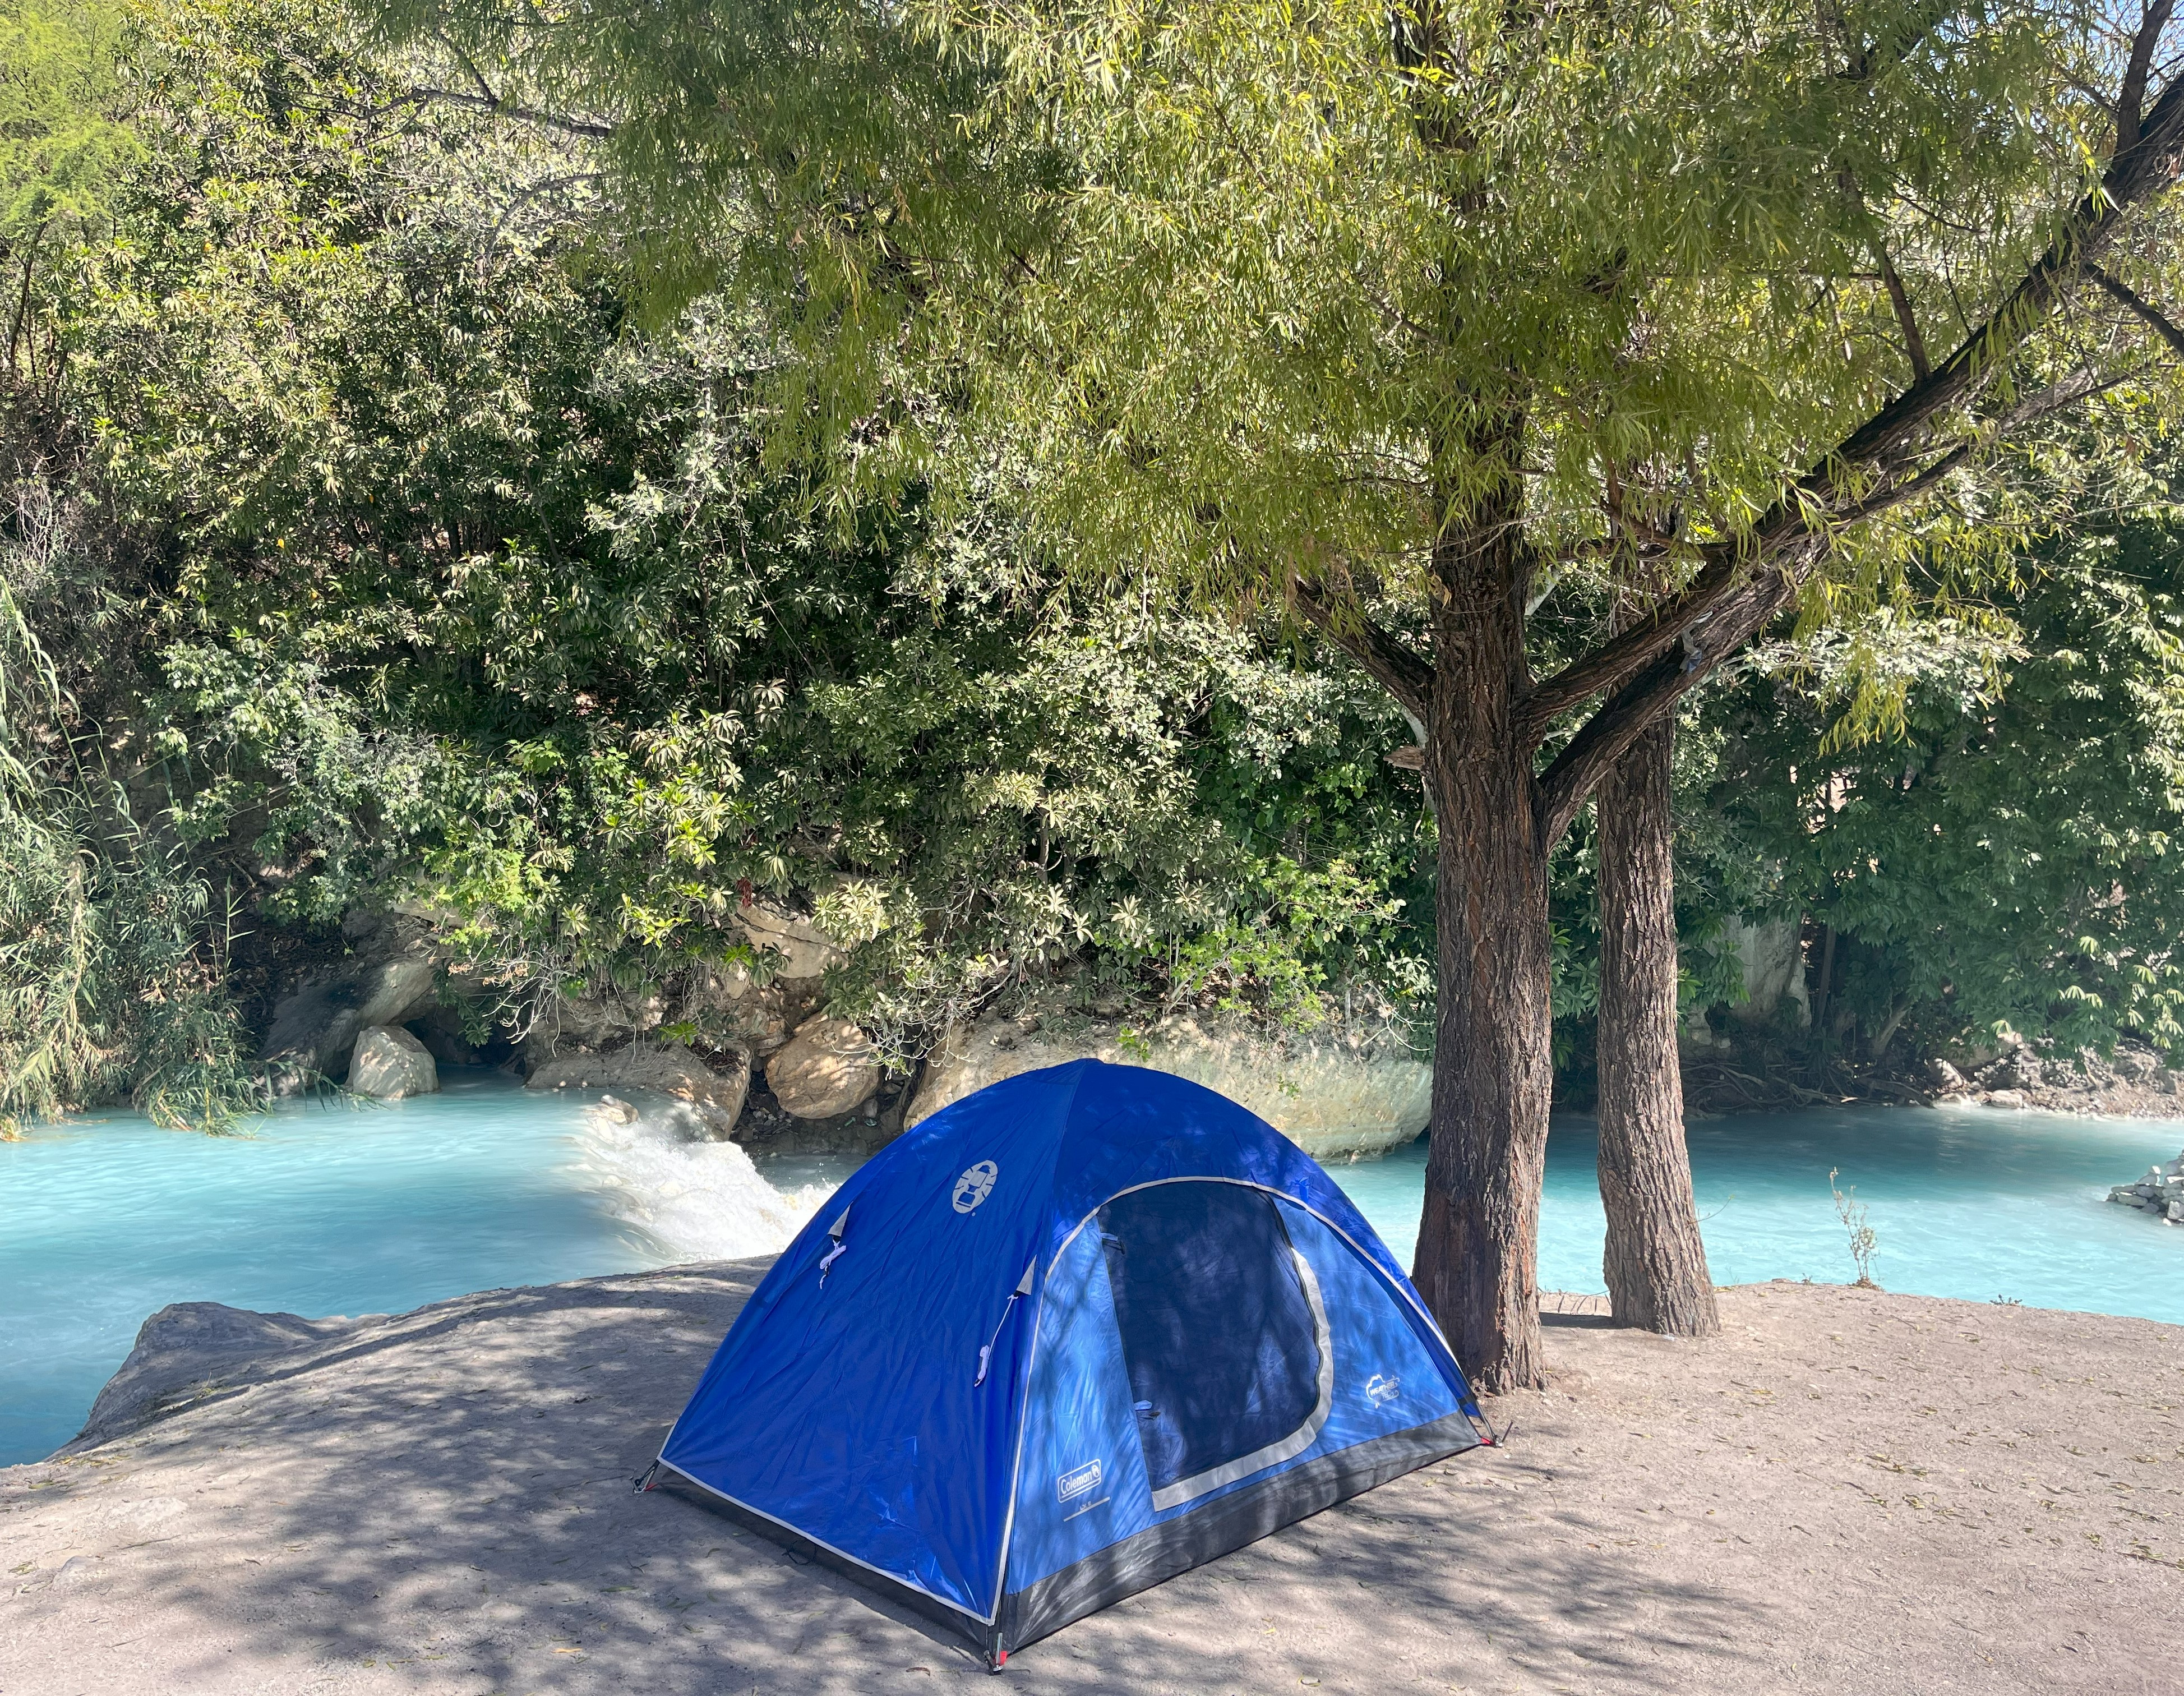 Grutas Tolantongo | Camping